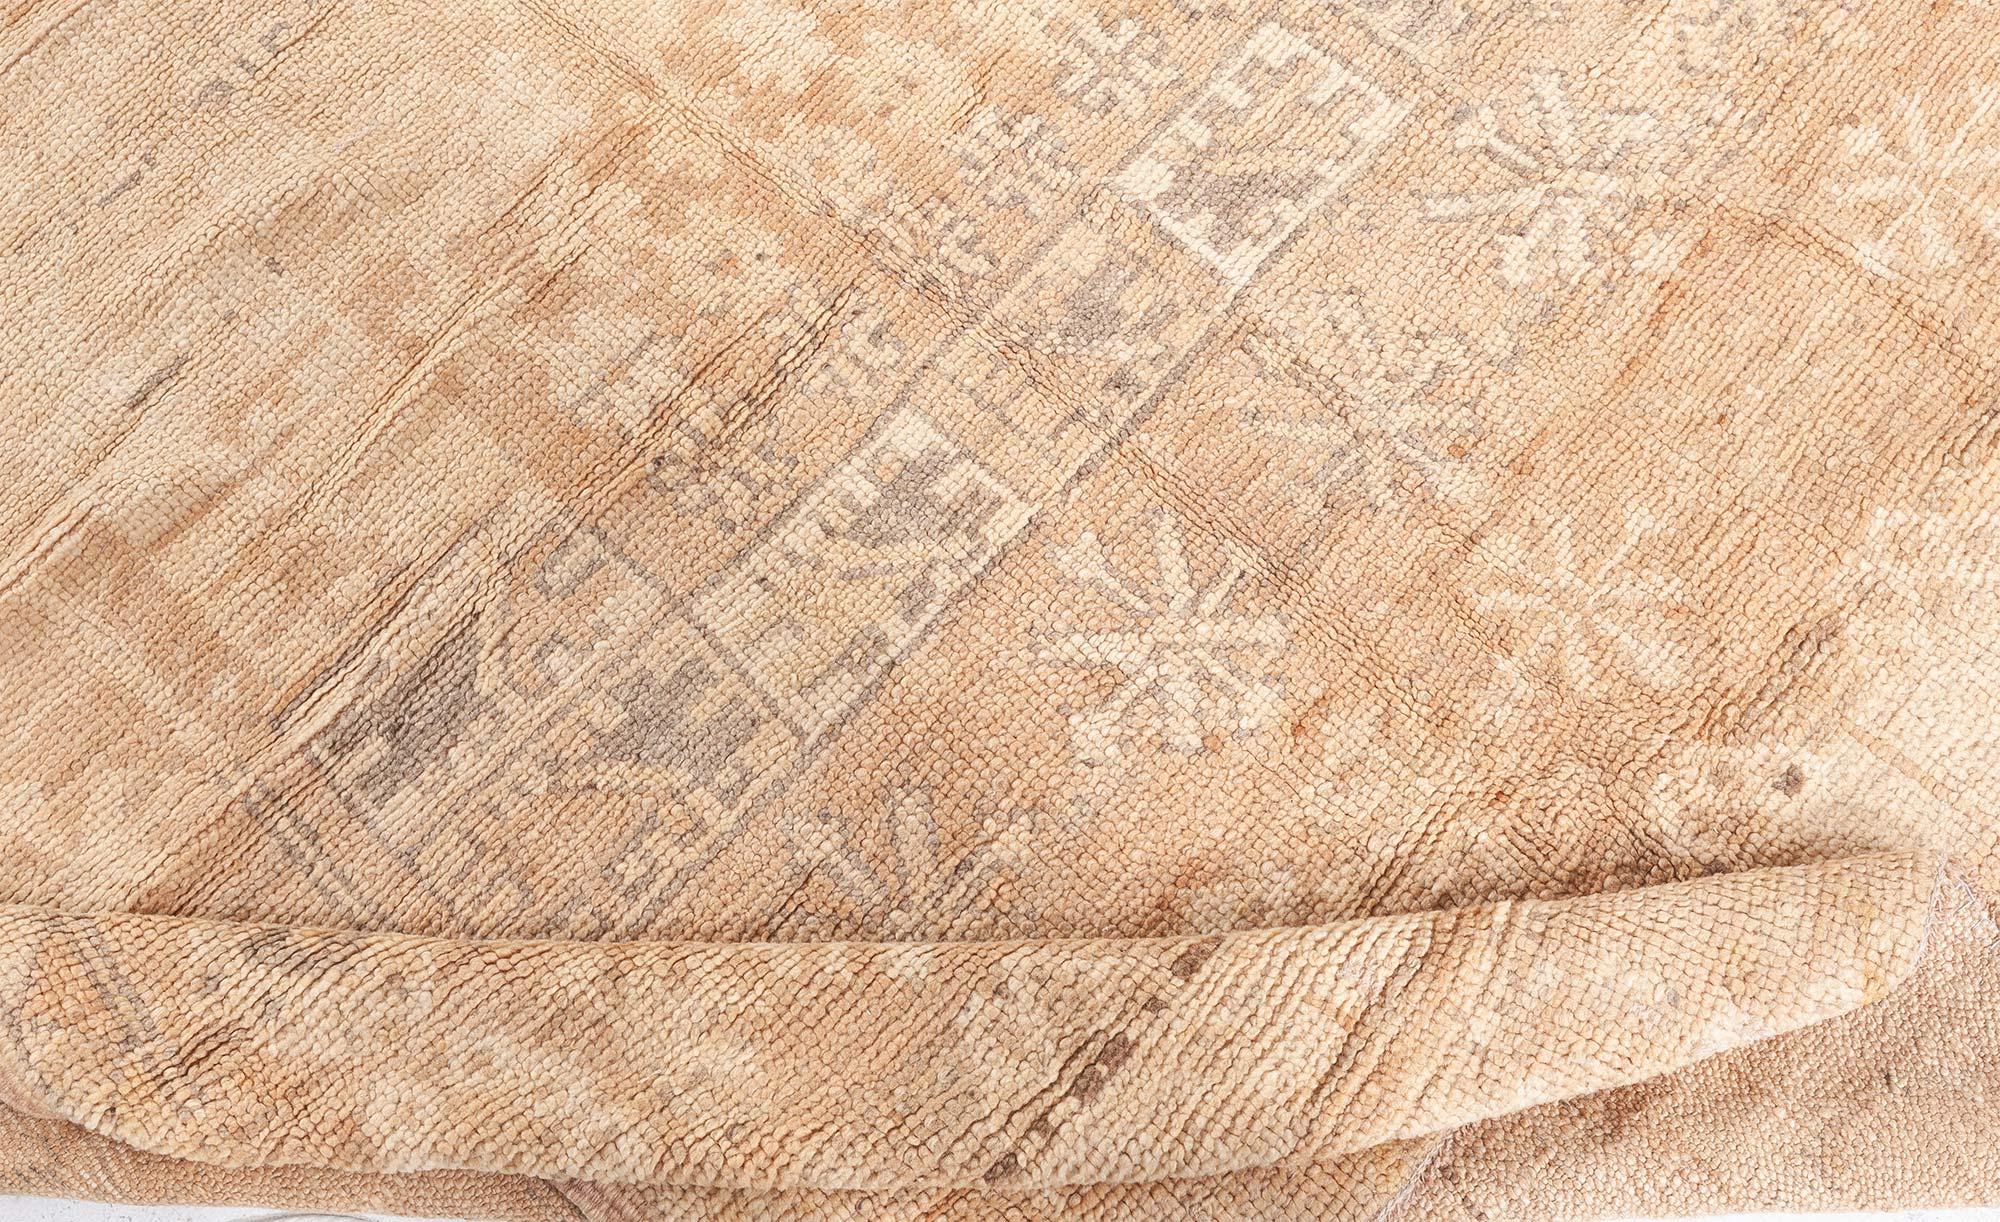 Mid-20th century Turkish Oushak abstract beige handmade wool rug
Size: 6'4